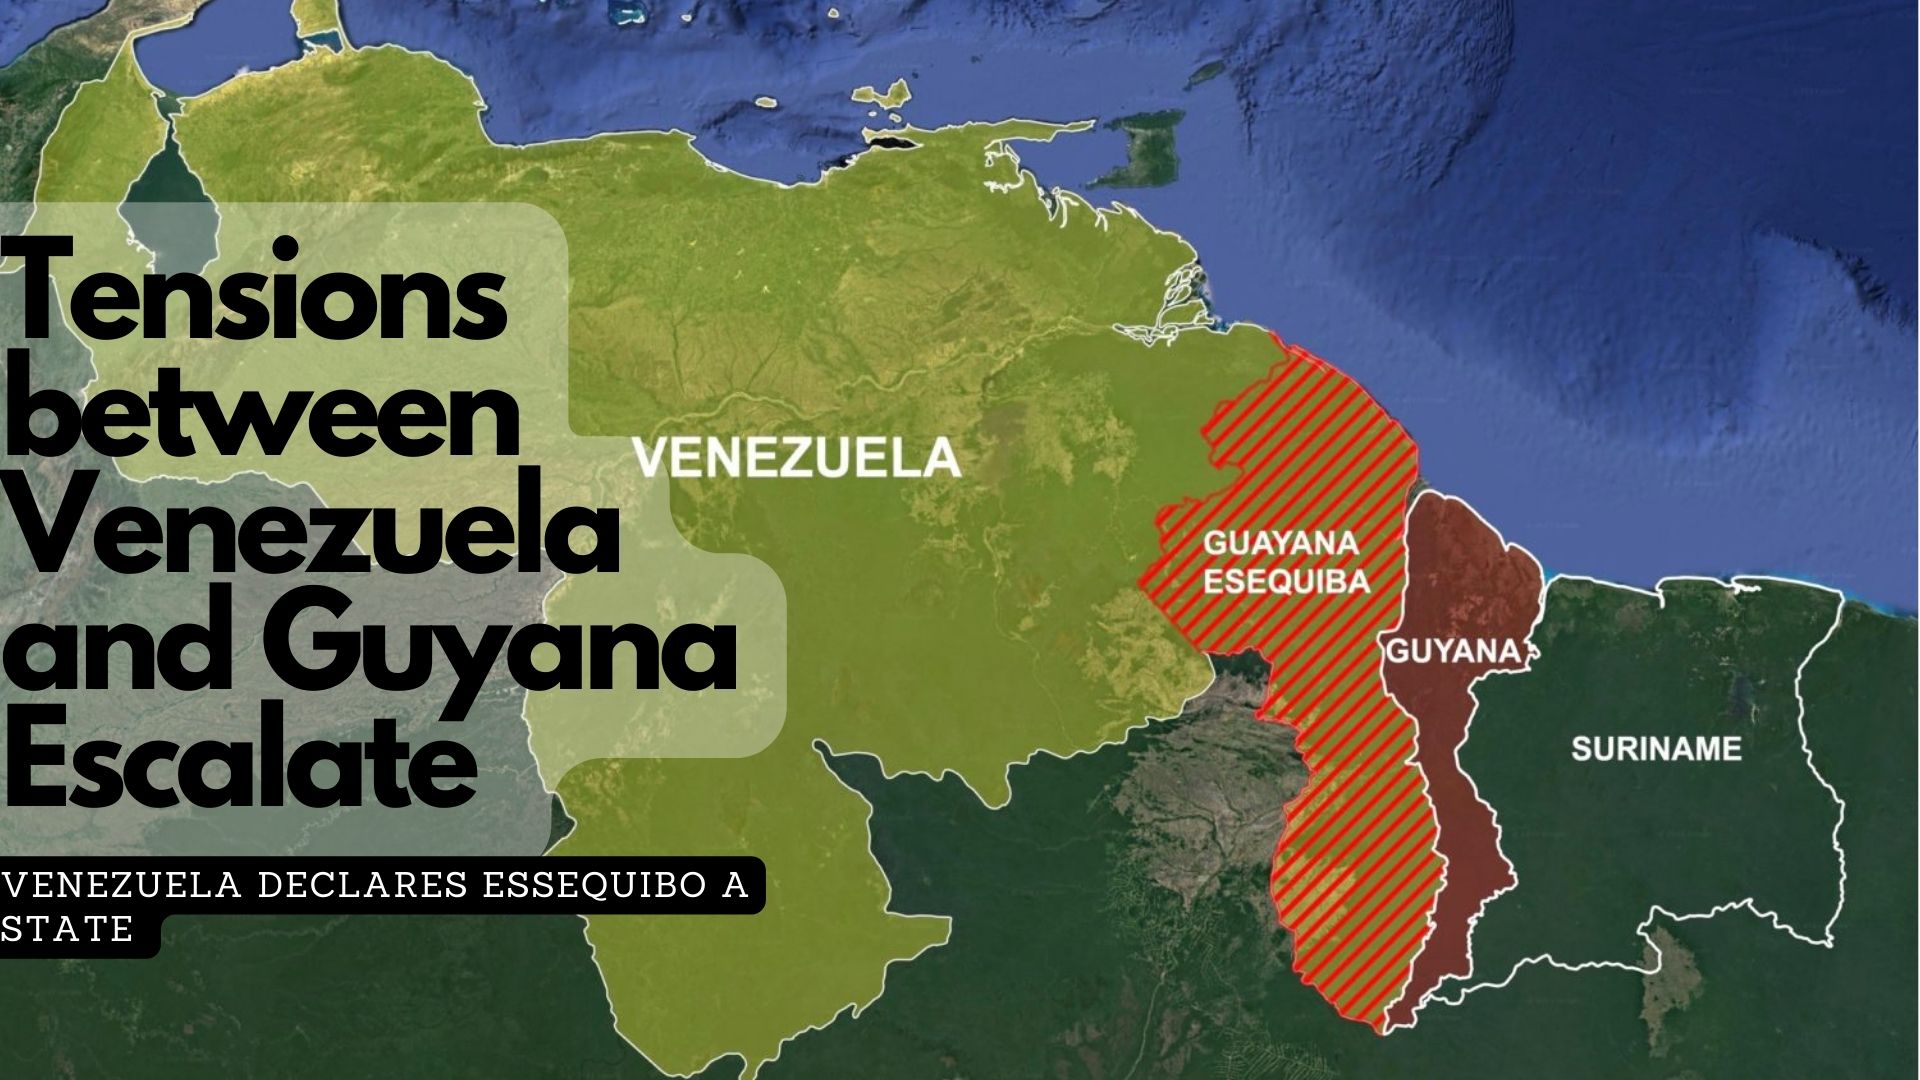 Tensions between Venezuela and Guyana Escalate 